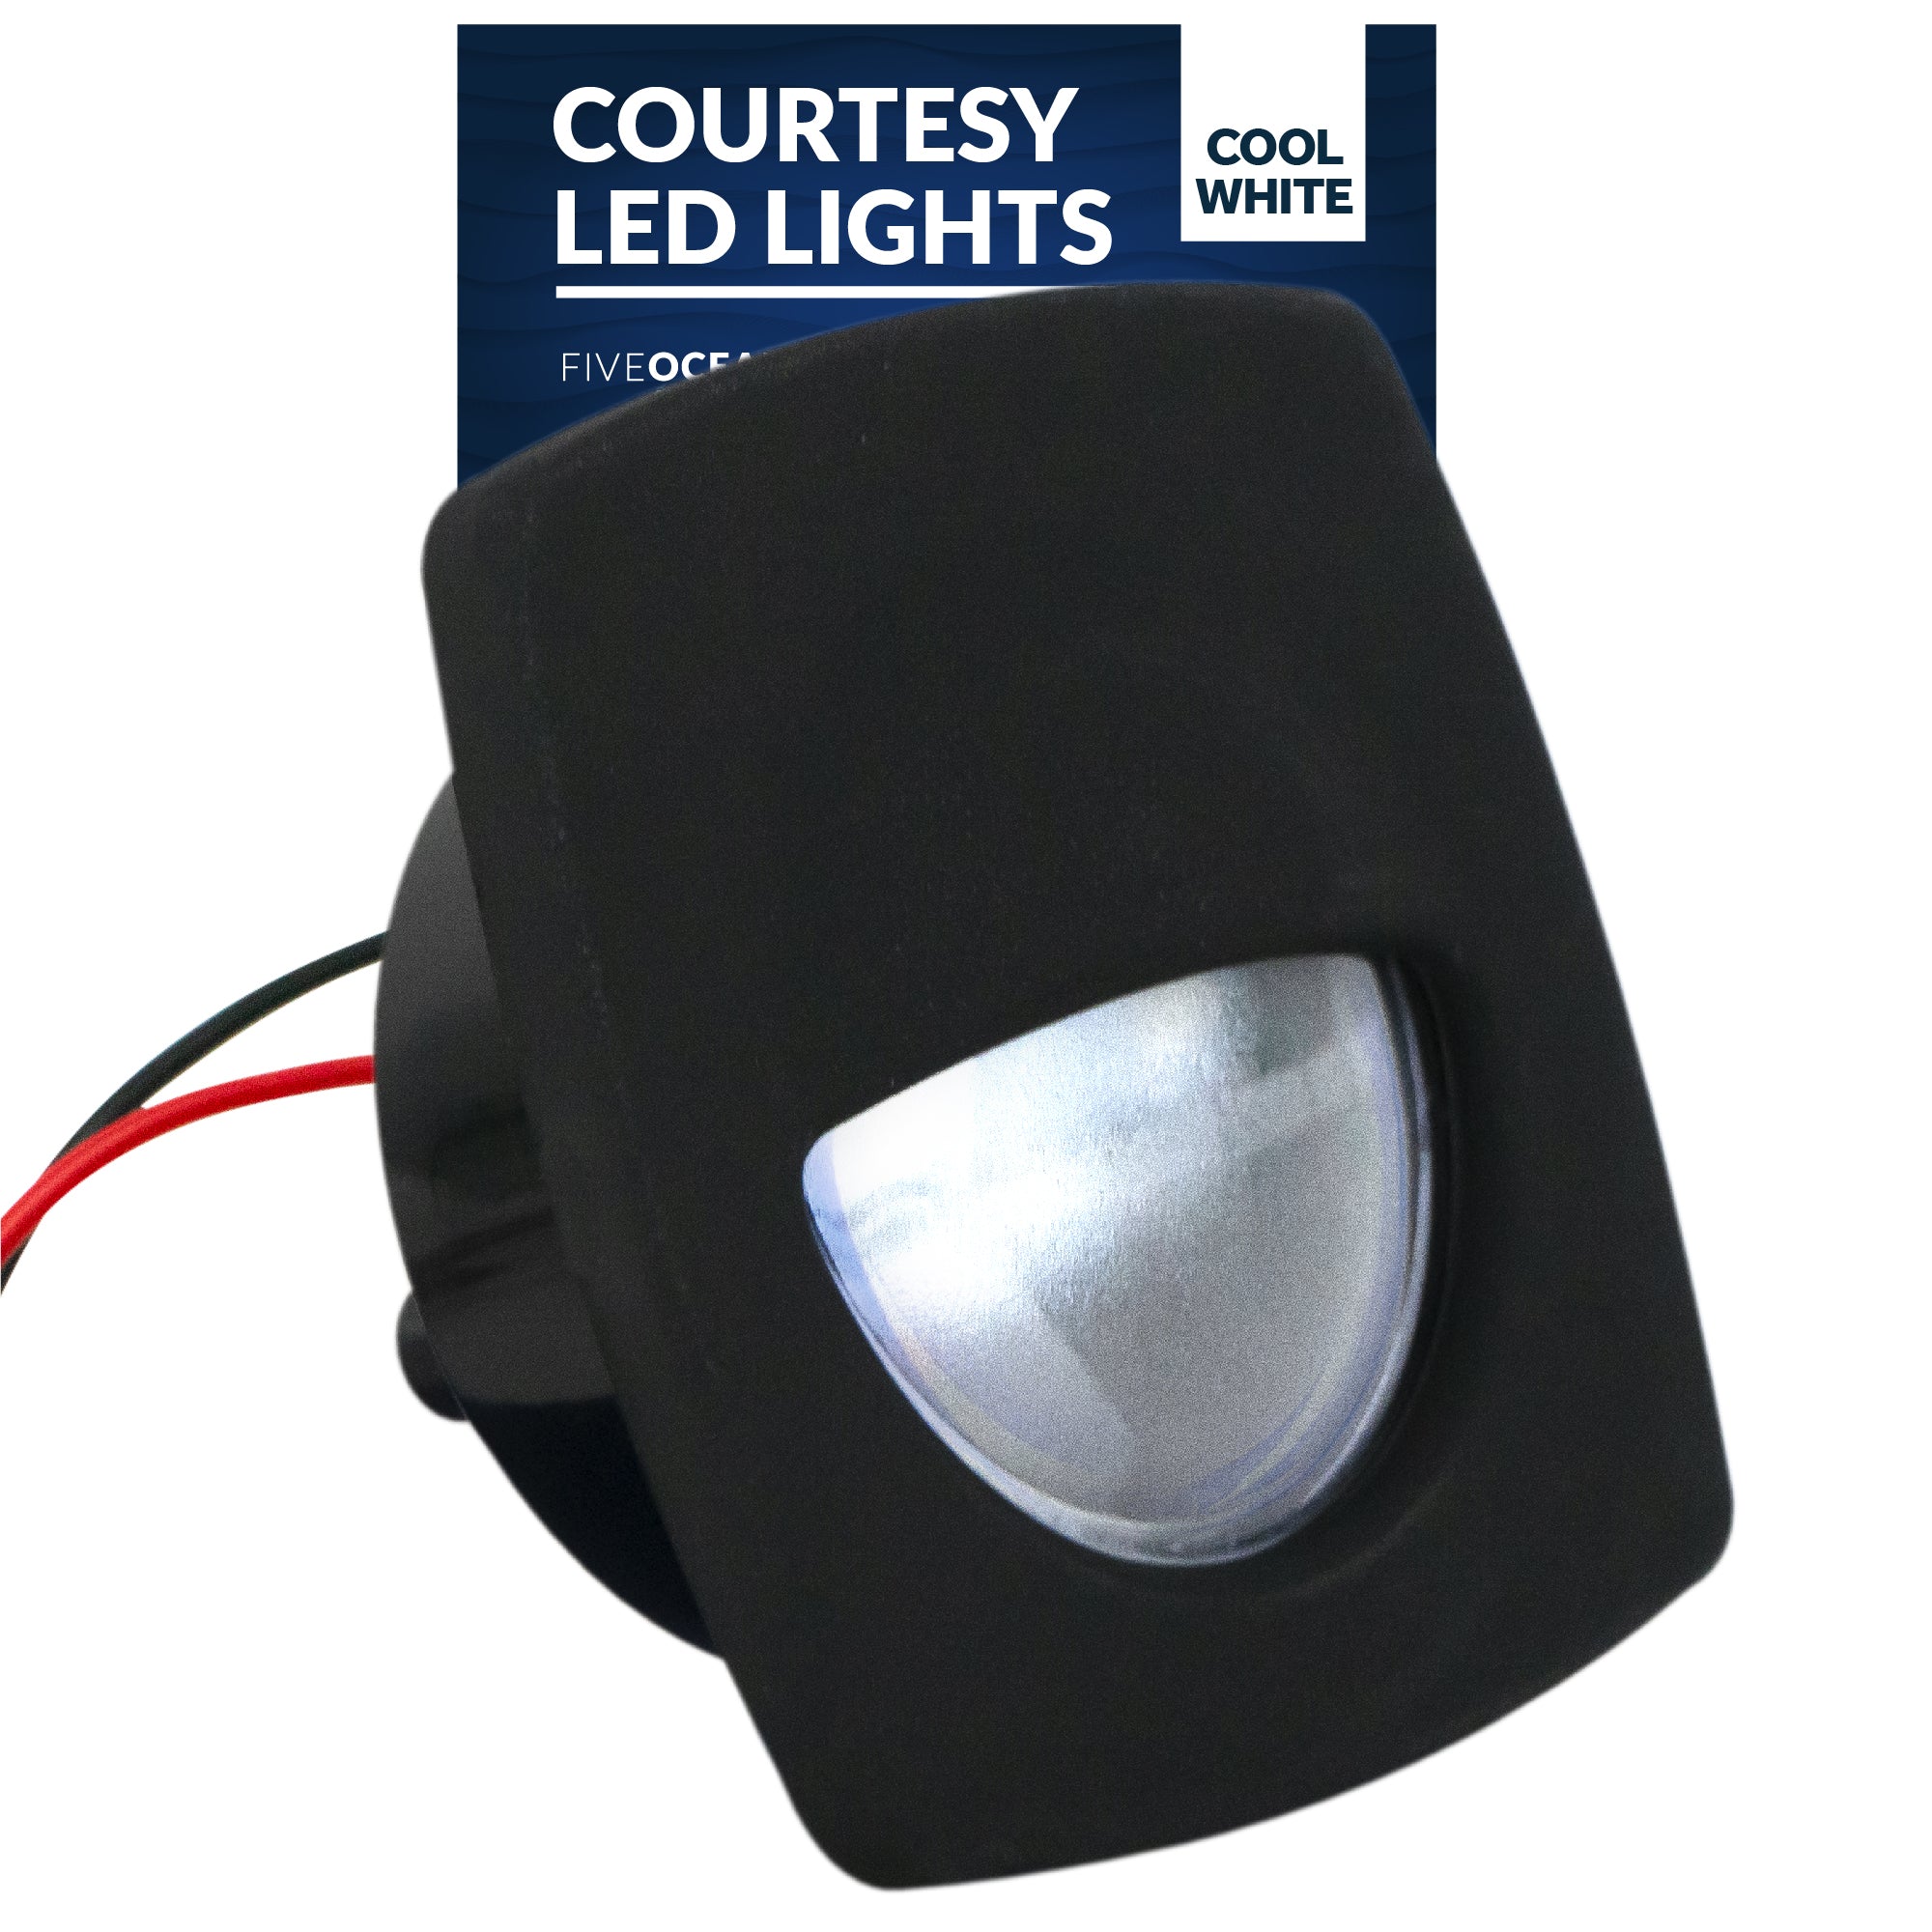 LED Courtesy Companion Way Light, Black Square, Cool White - FO2313